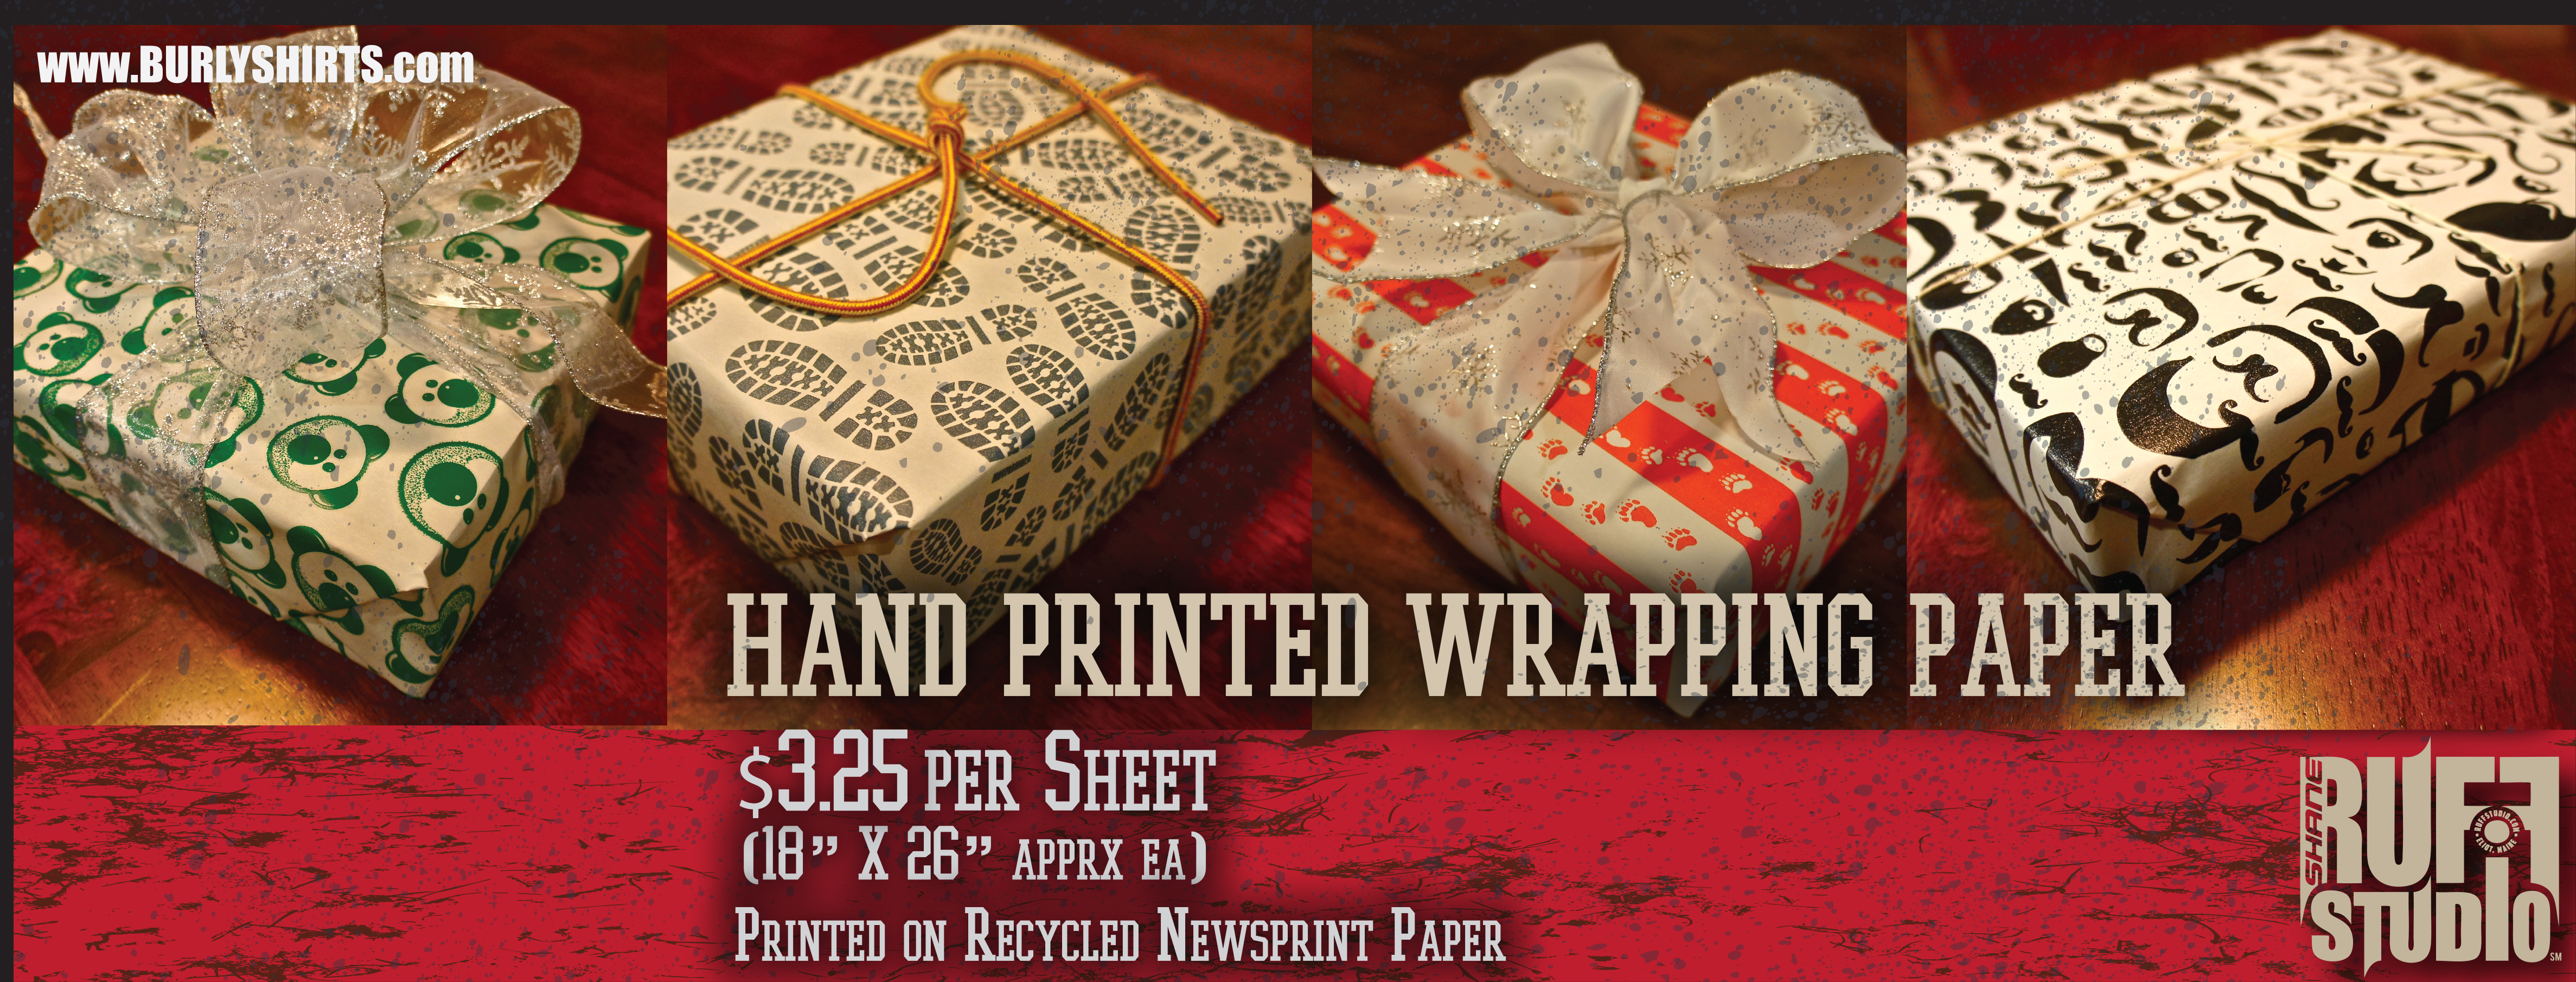 wrap-paper-ad2a.jpg